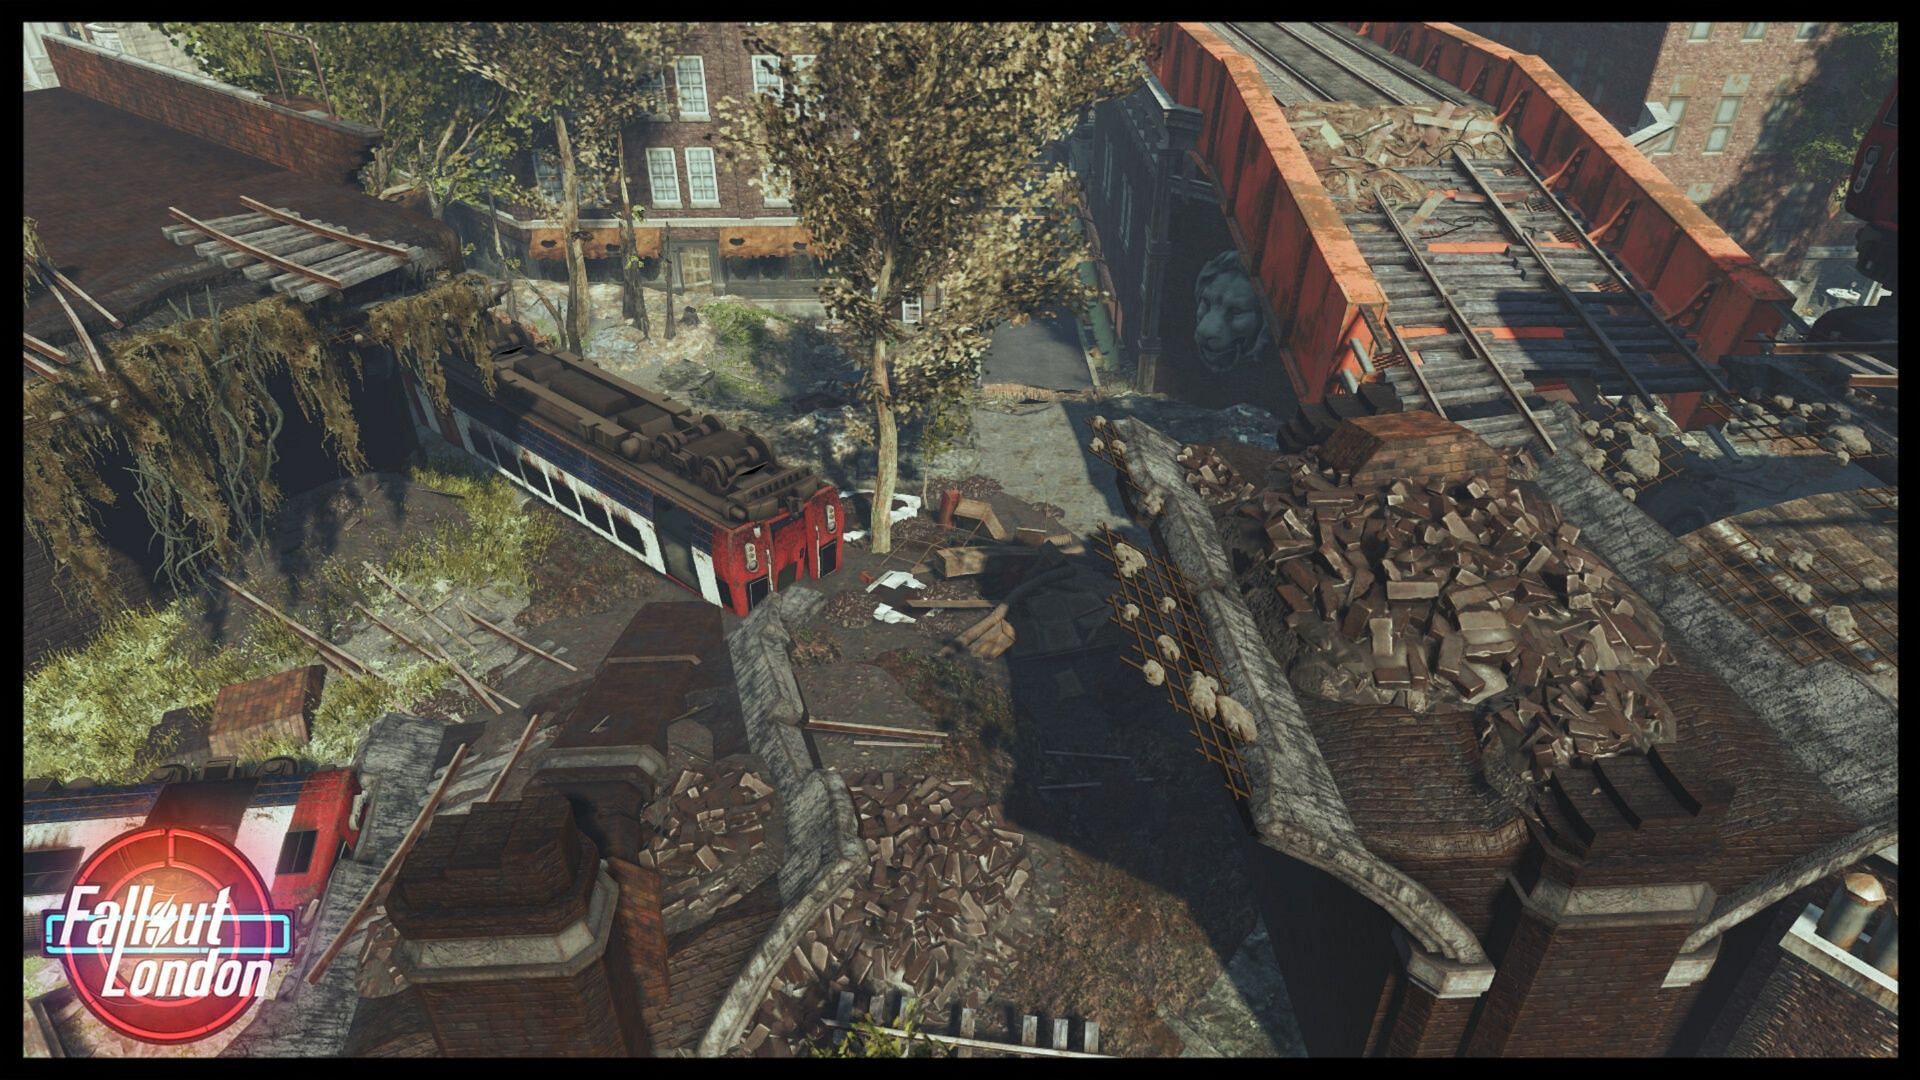 Though in ruins, Fallout London is still gorgeous (Image via Team Folon)